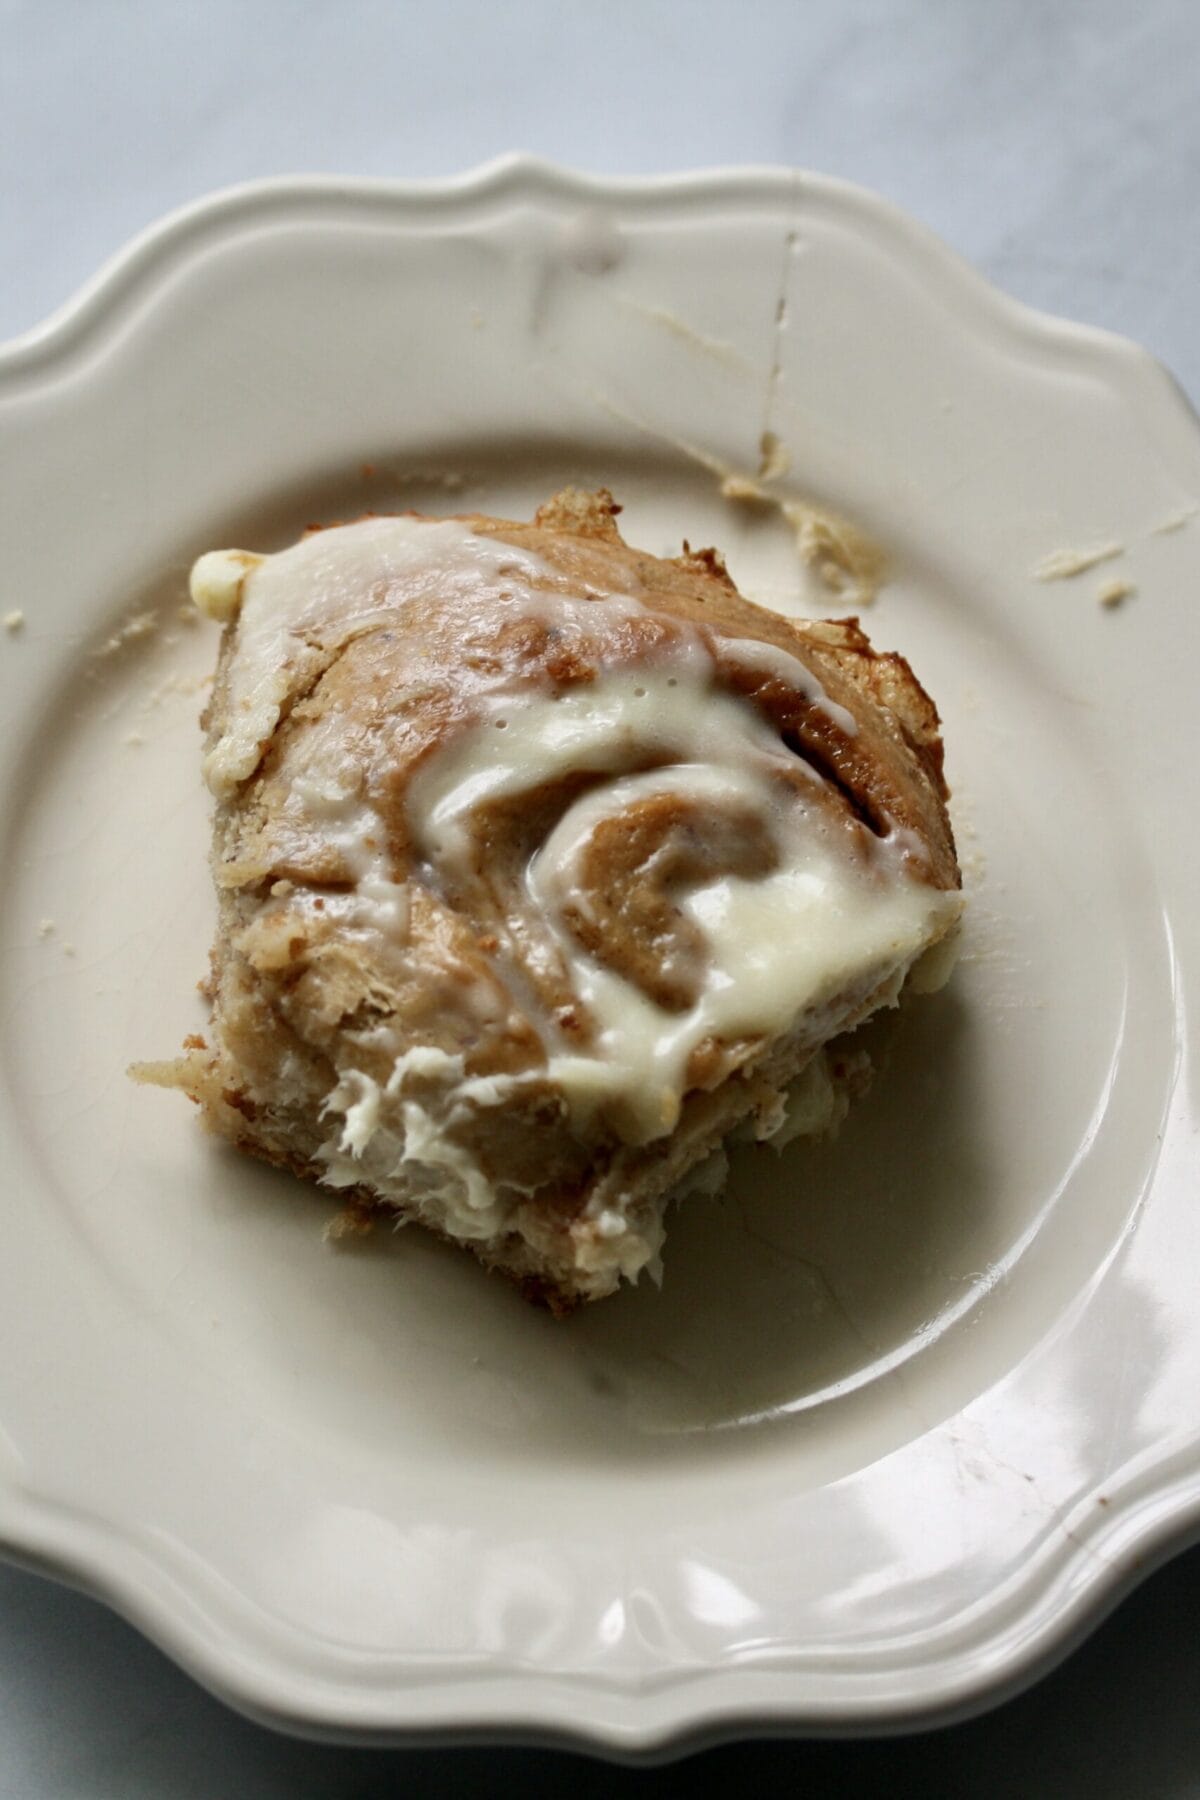 A close-up of an oat flour cinnamon roll.